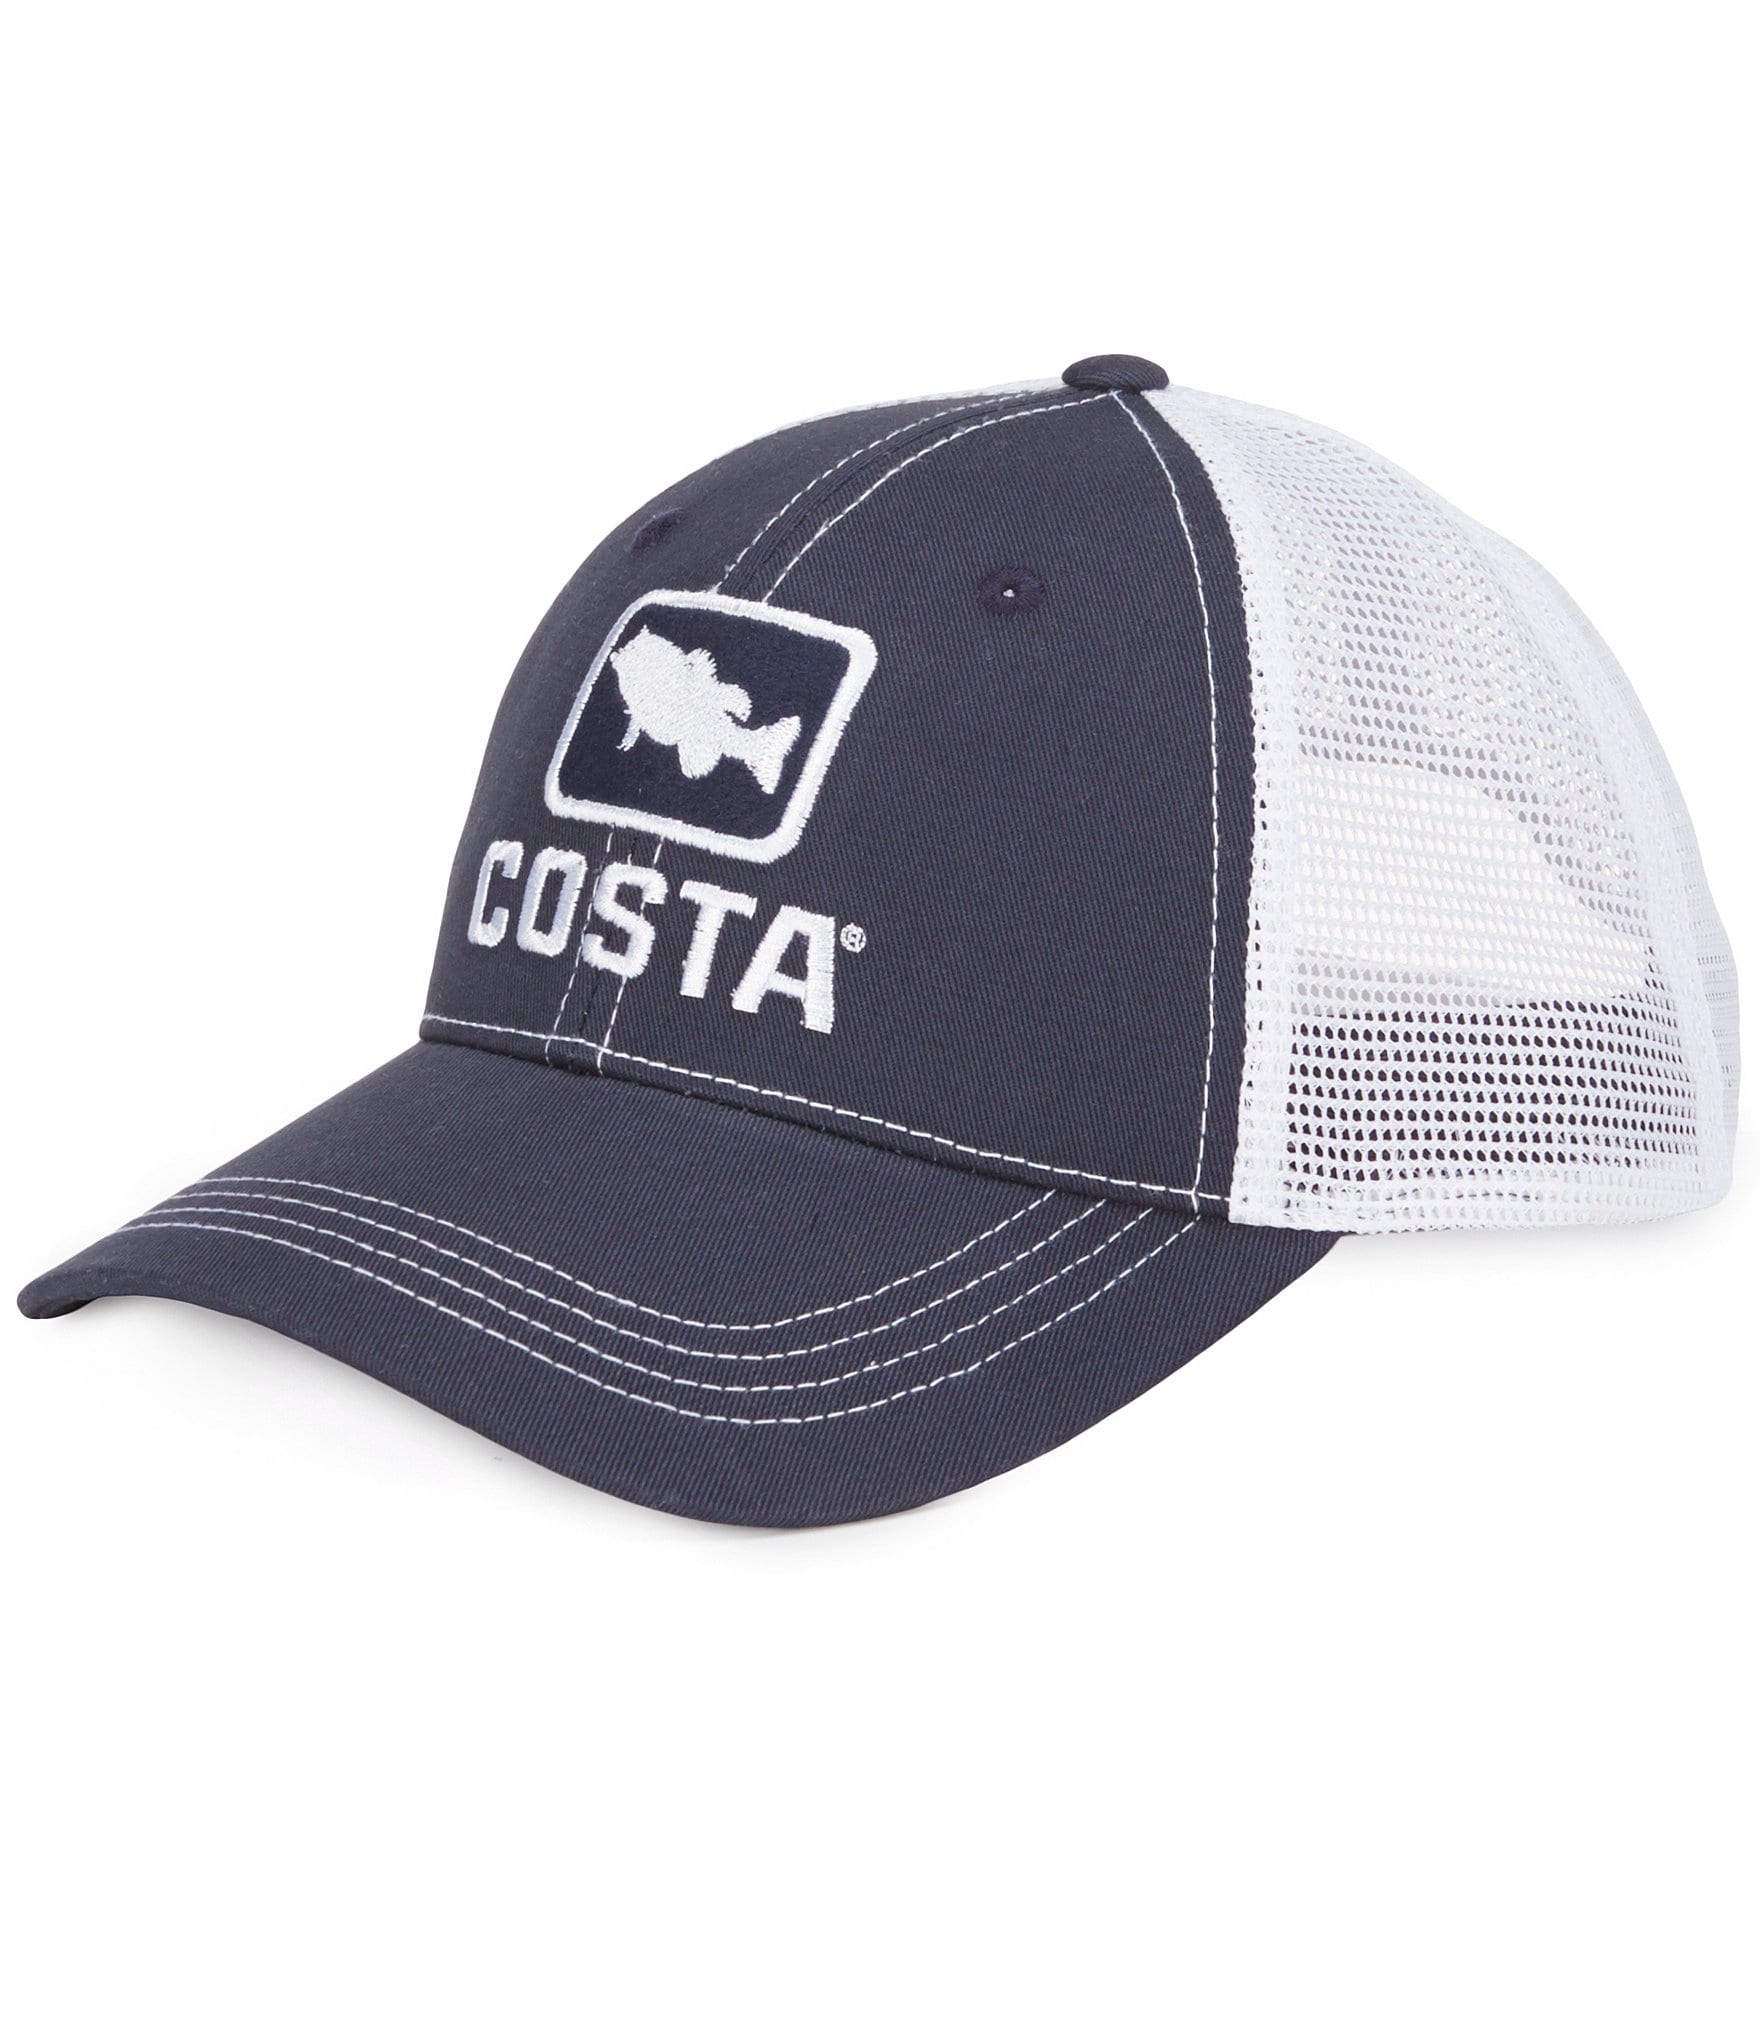 Costa Embroidered XL Bass Trucker Hat